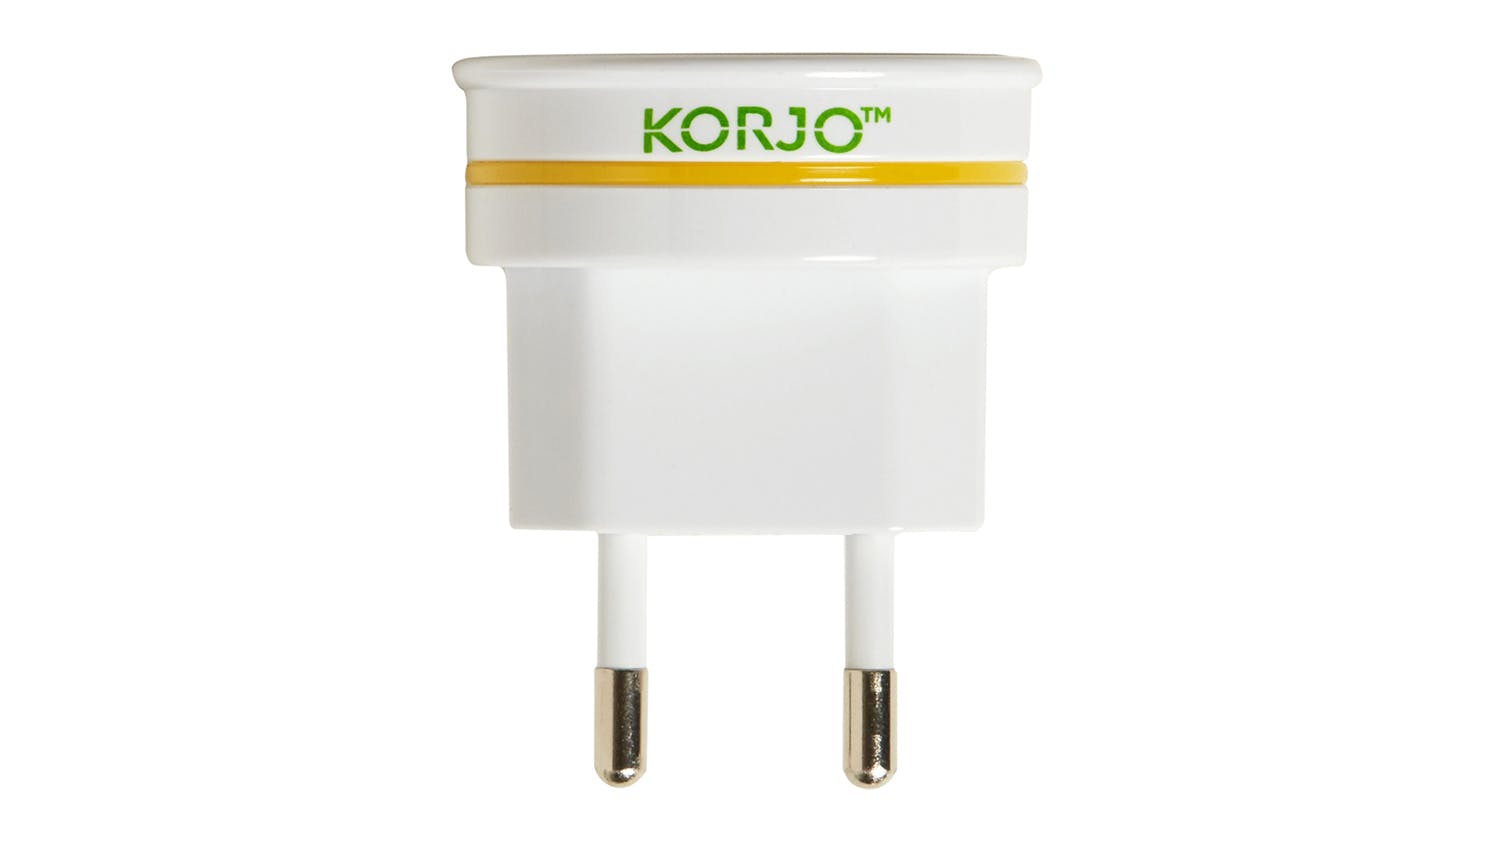 korjo travel adapter review